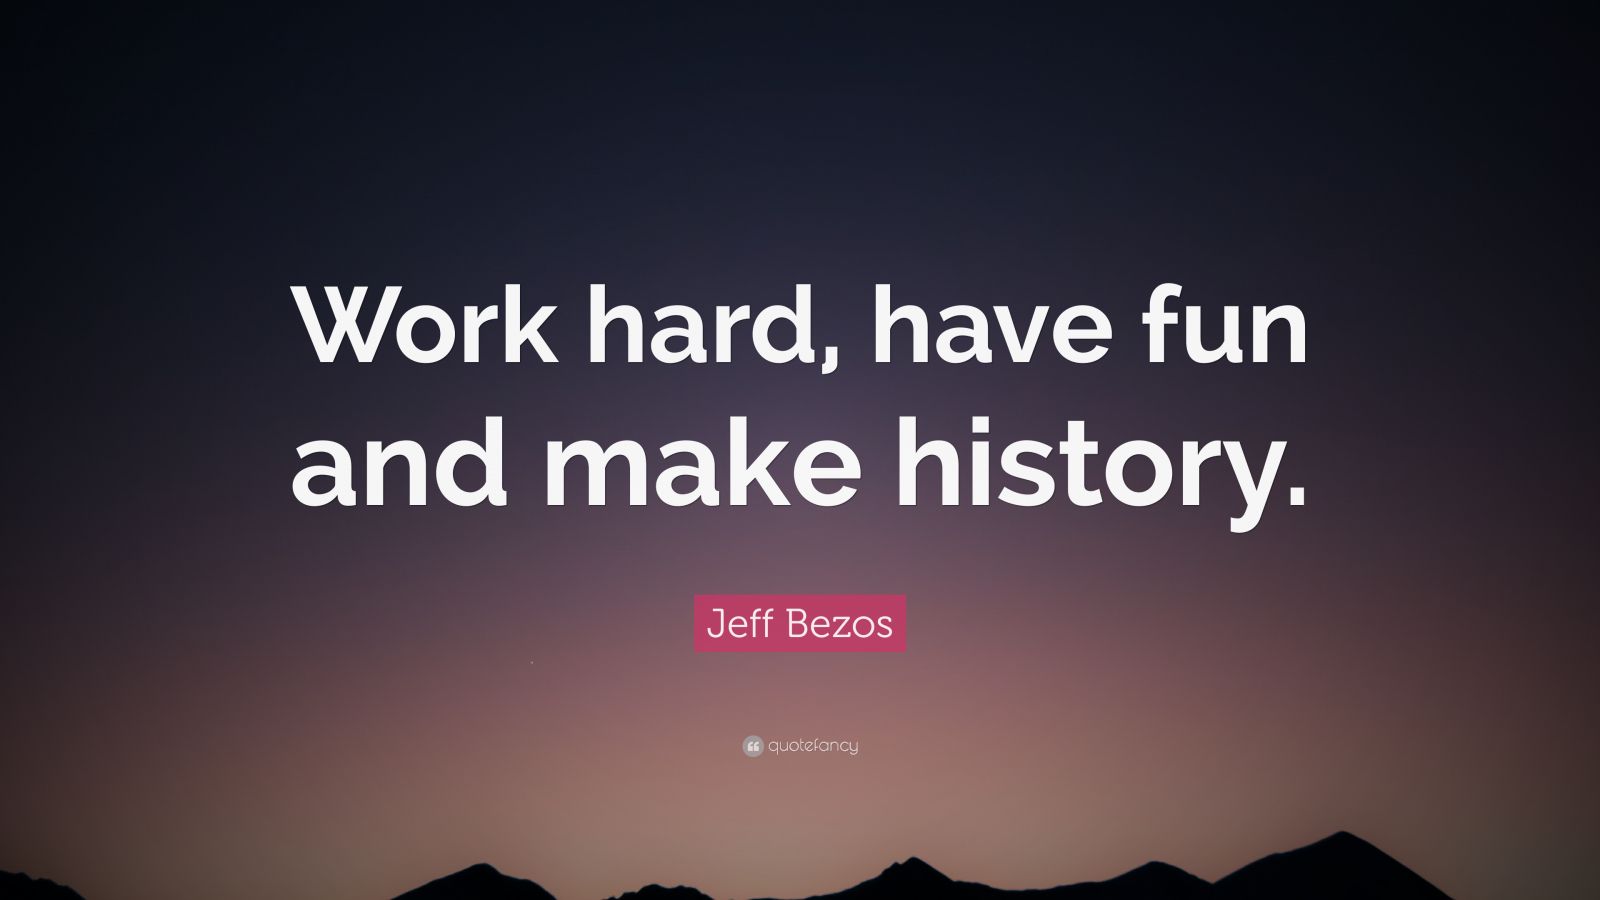 Jeff Bezos Quote: “Work hard, have fun and make history.” (30 ...